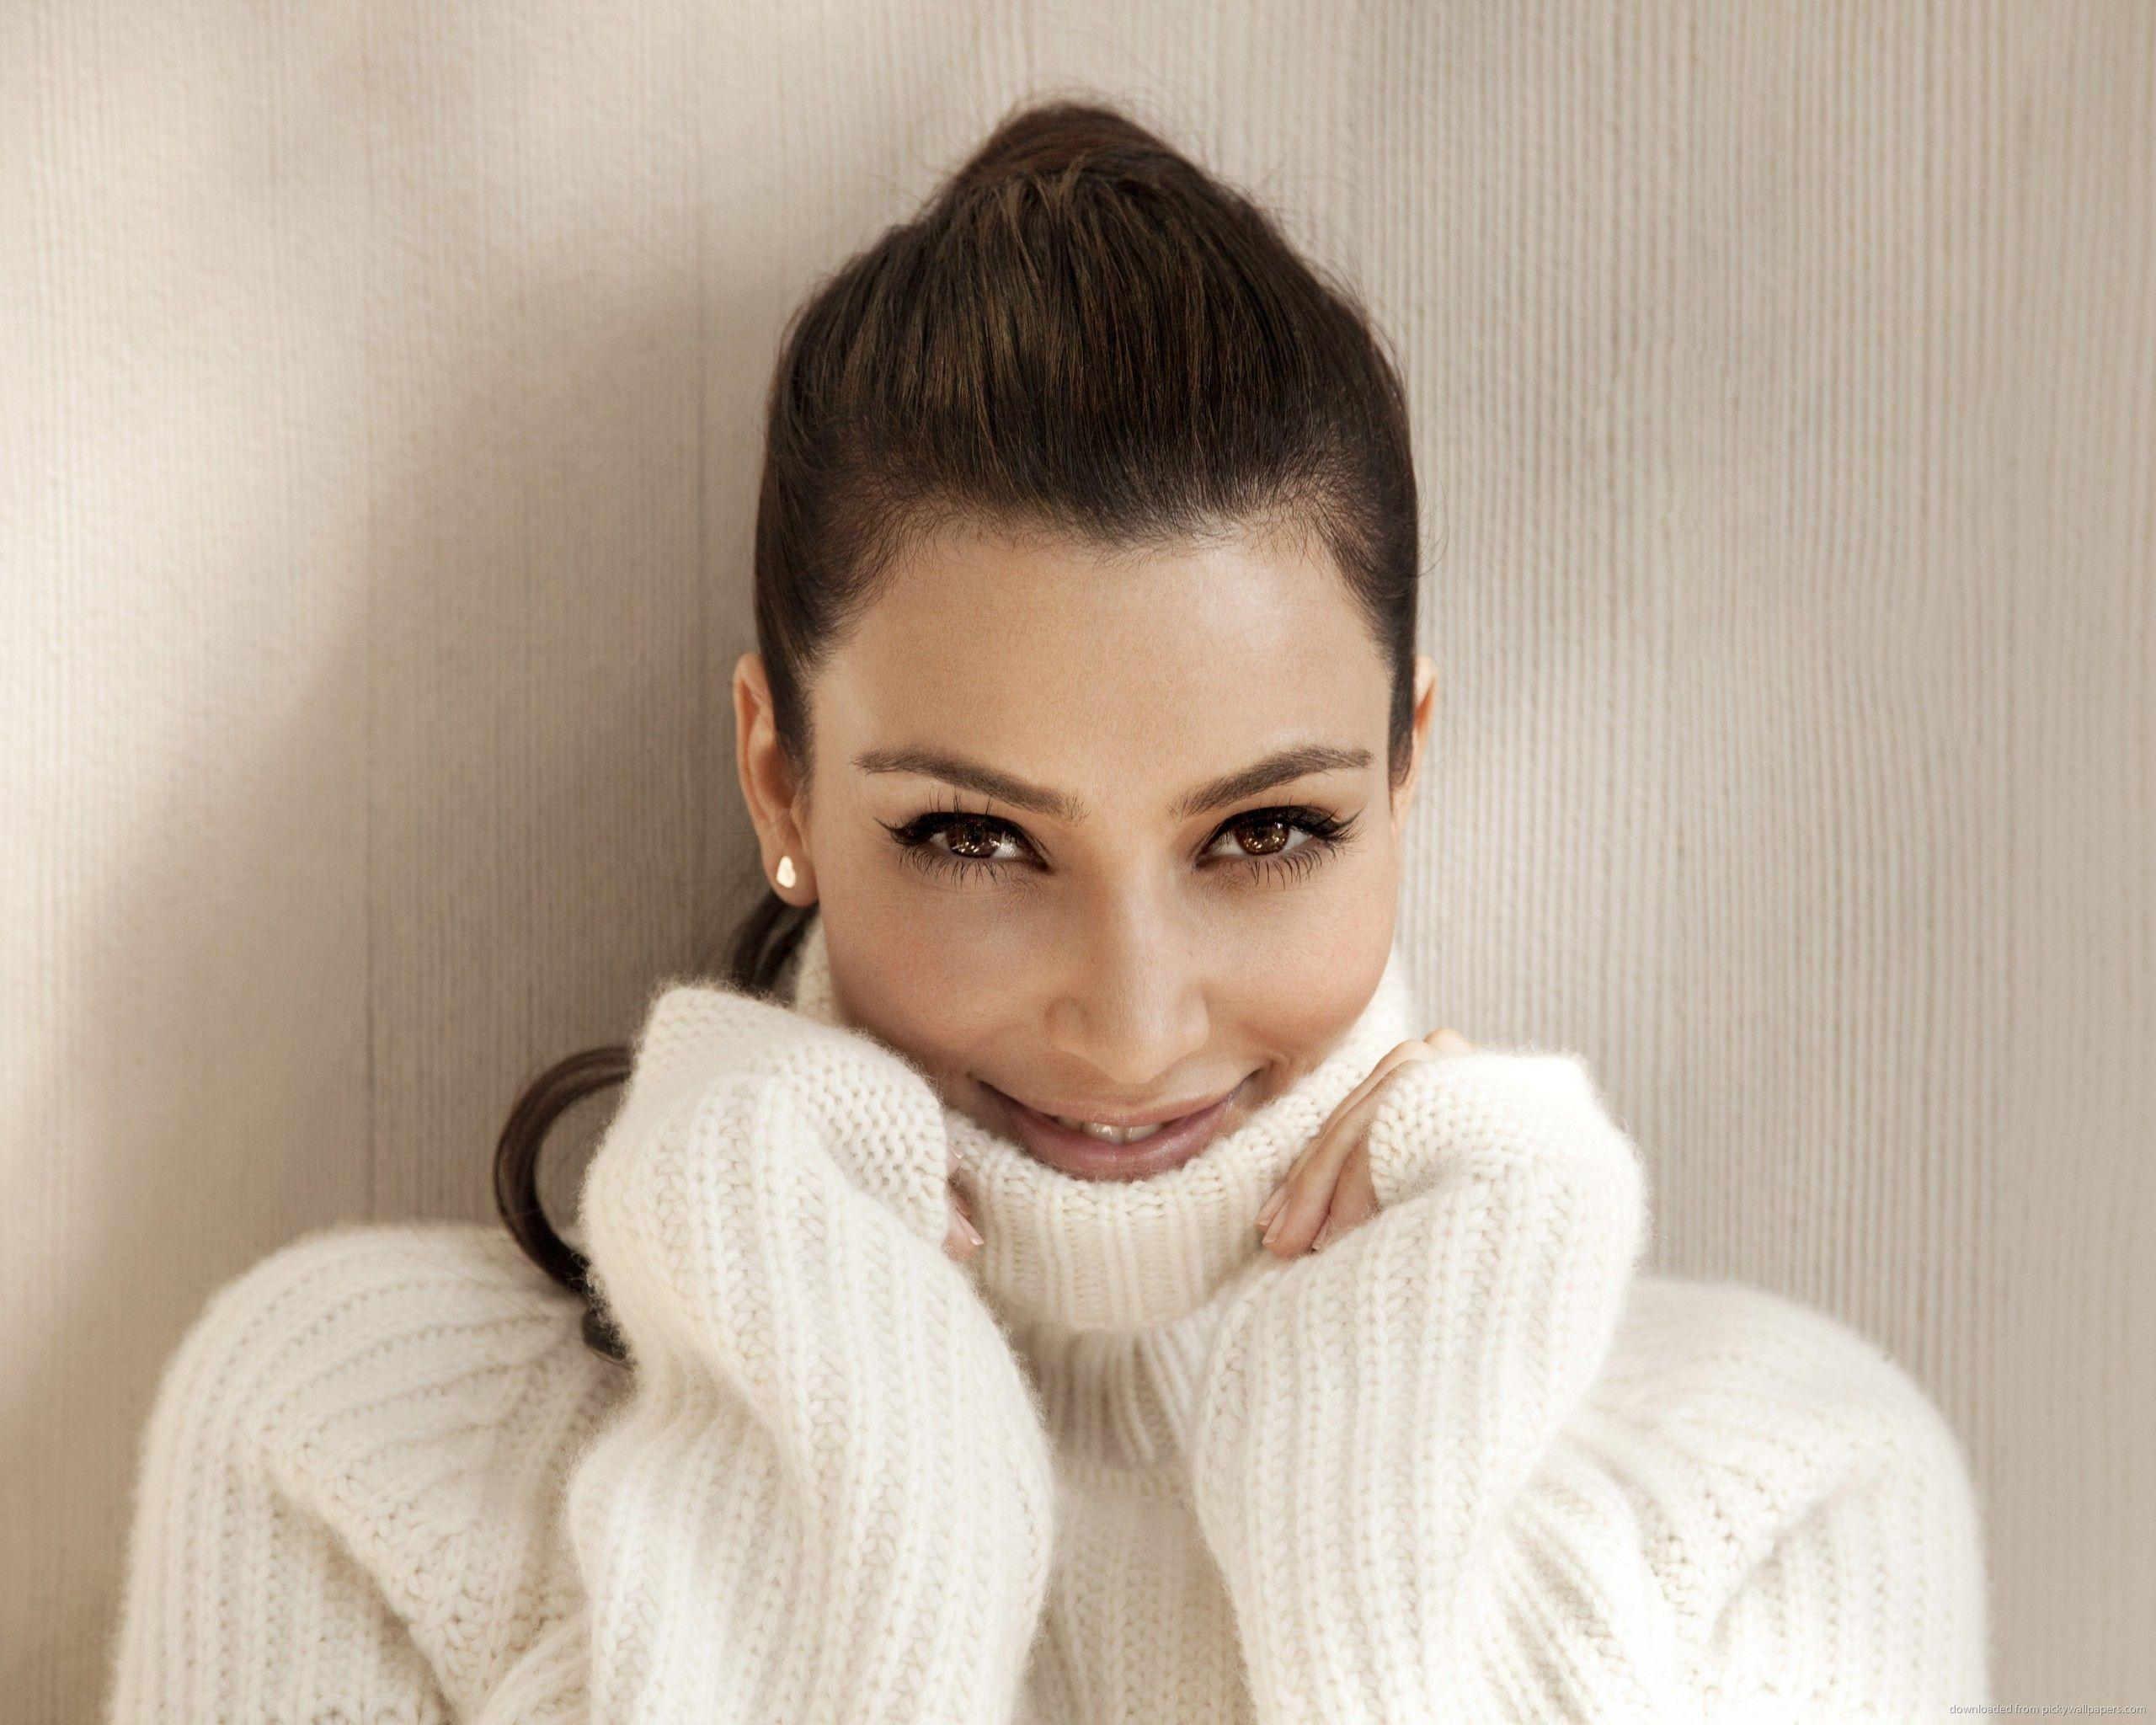 Download 2560x2048 Cute Kim Kardashian In Comfy White Sweater